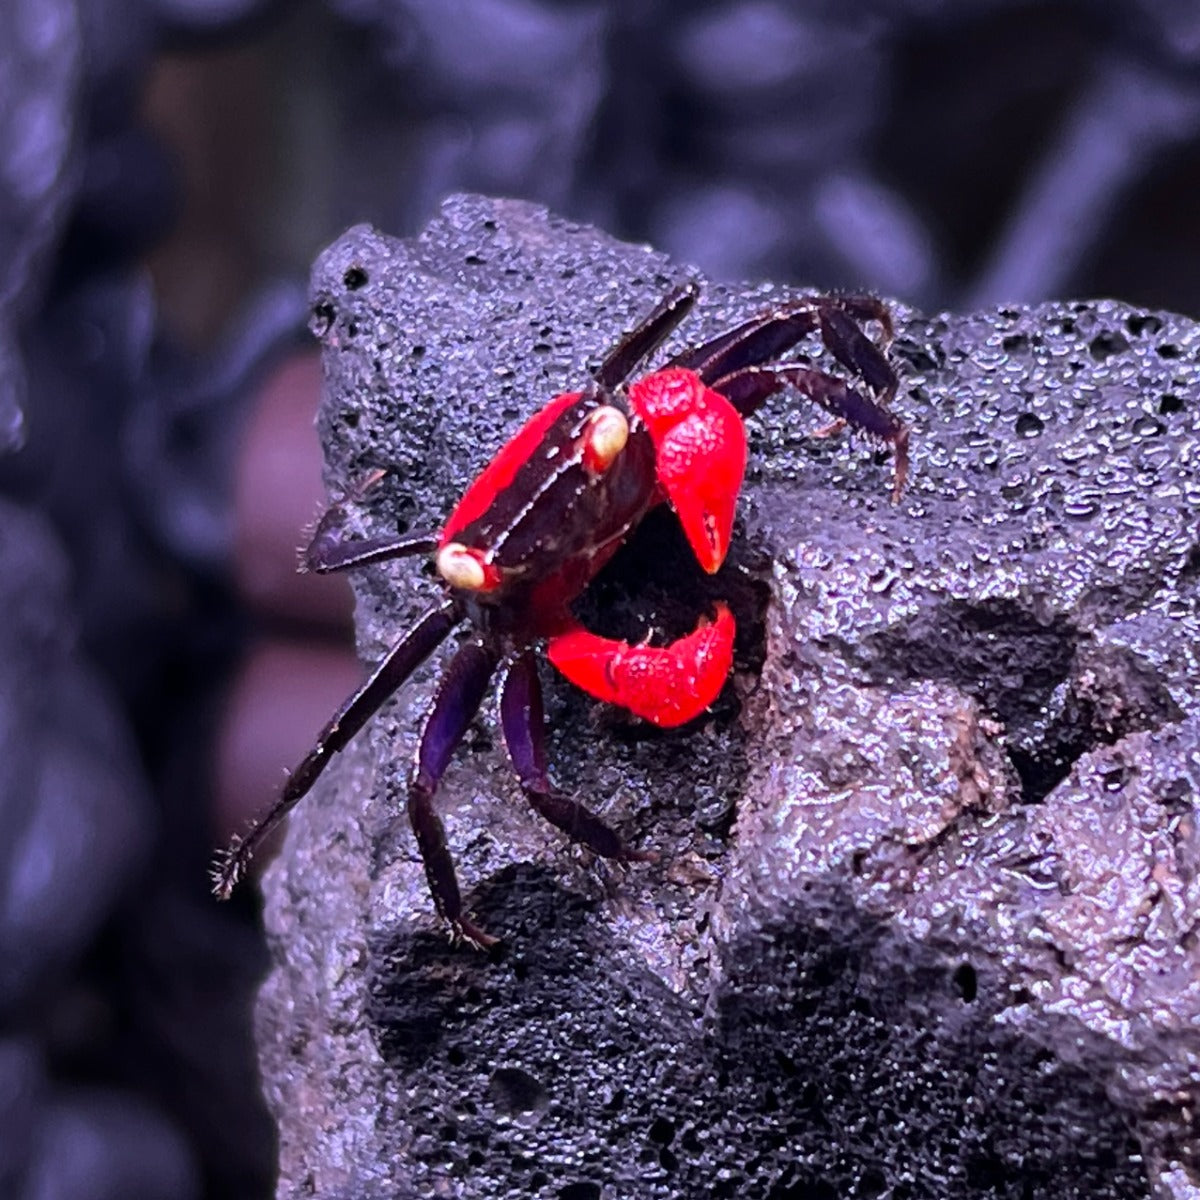 Red Devil Vampire Crab (Geosesarma hagen)